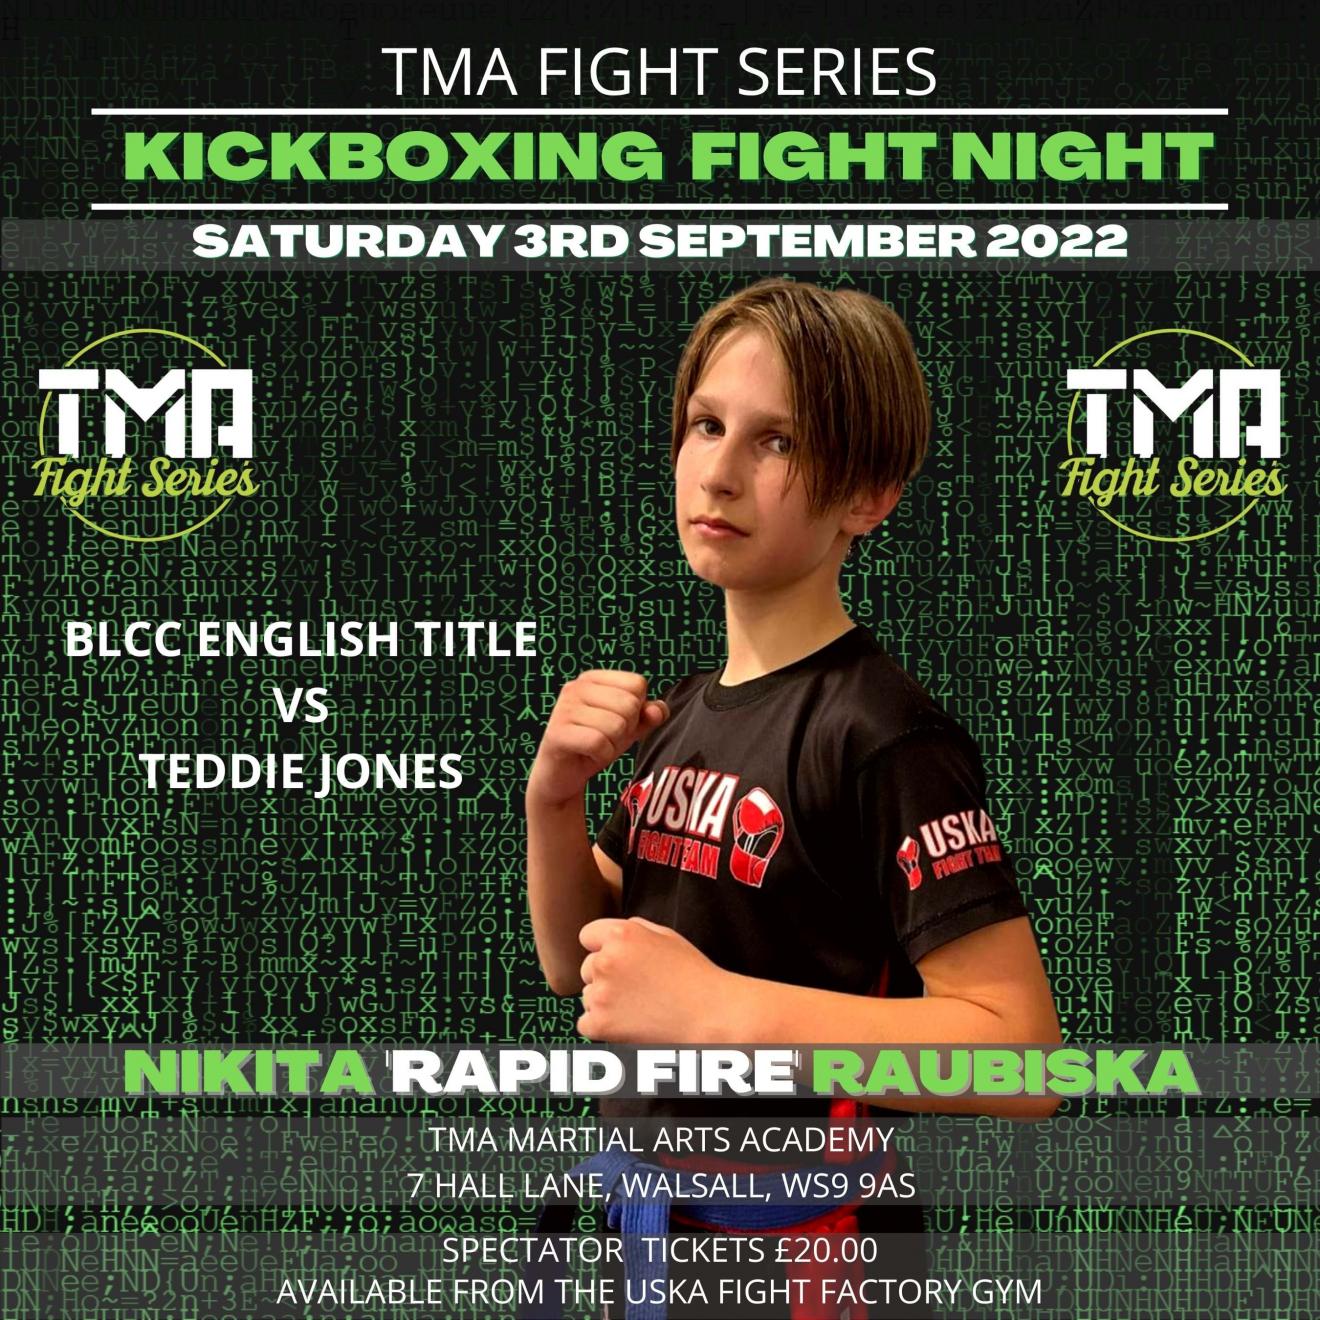 15-08-22 - Nikita 'Rapid Fire' Raubiska gets BLCC English Title Shot!